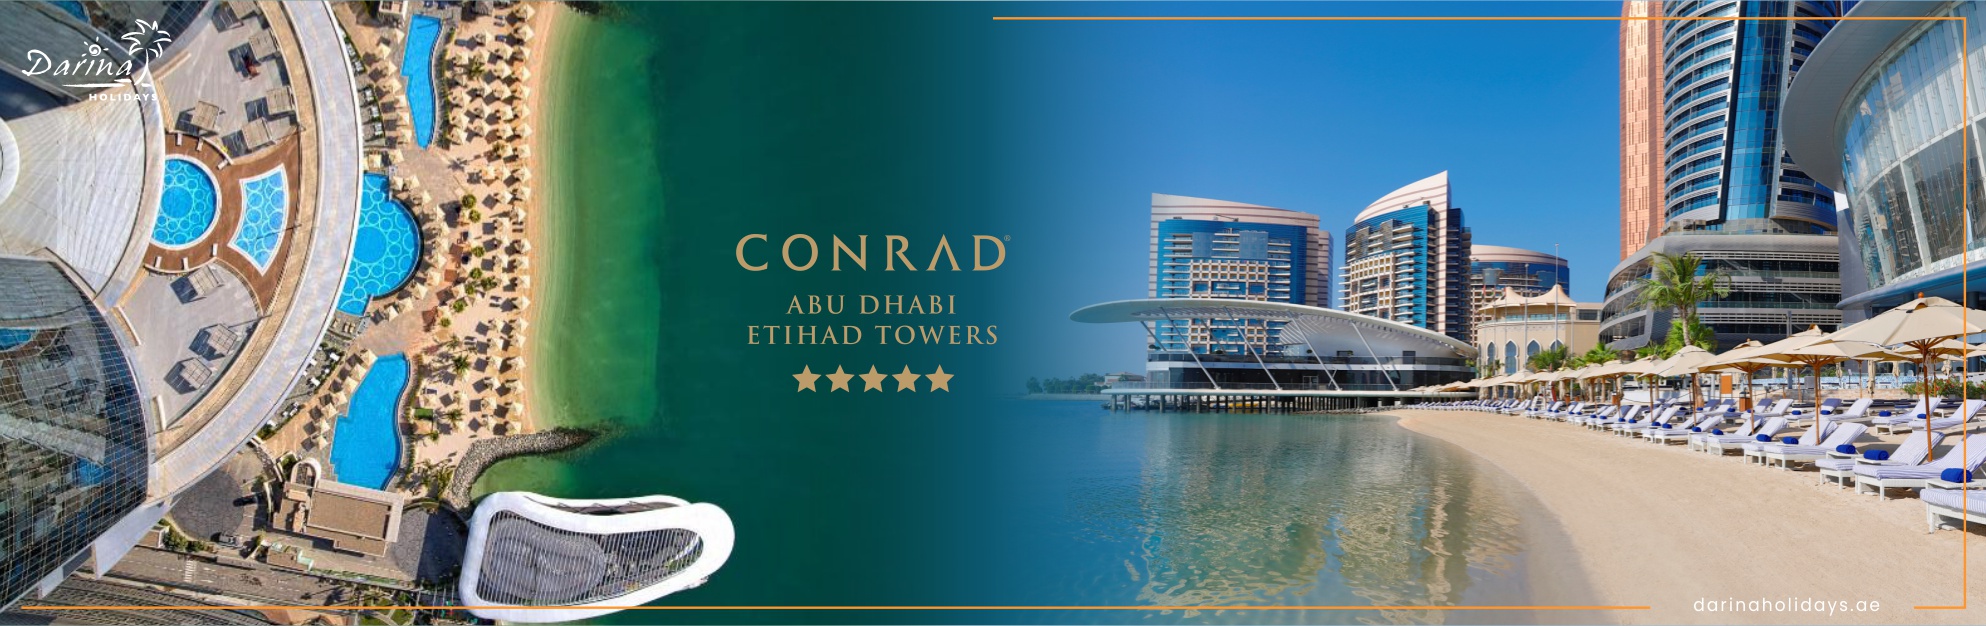 CONRAD HOTEL ABU DHABI ETIHAD TOWERS